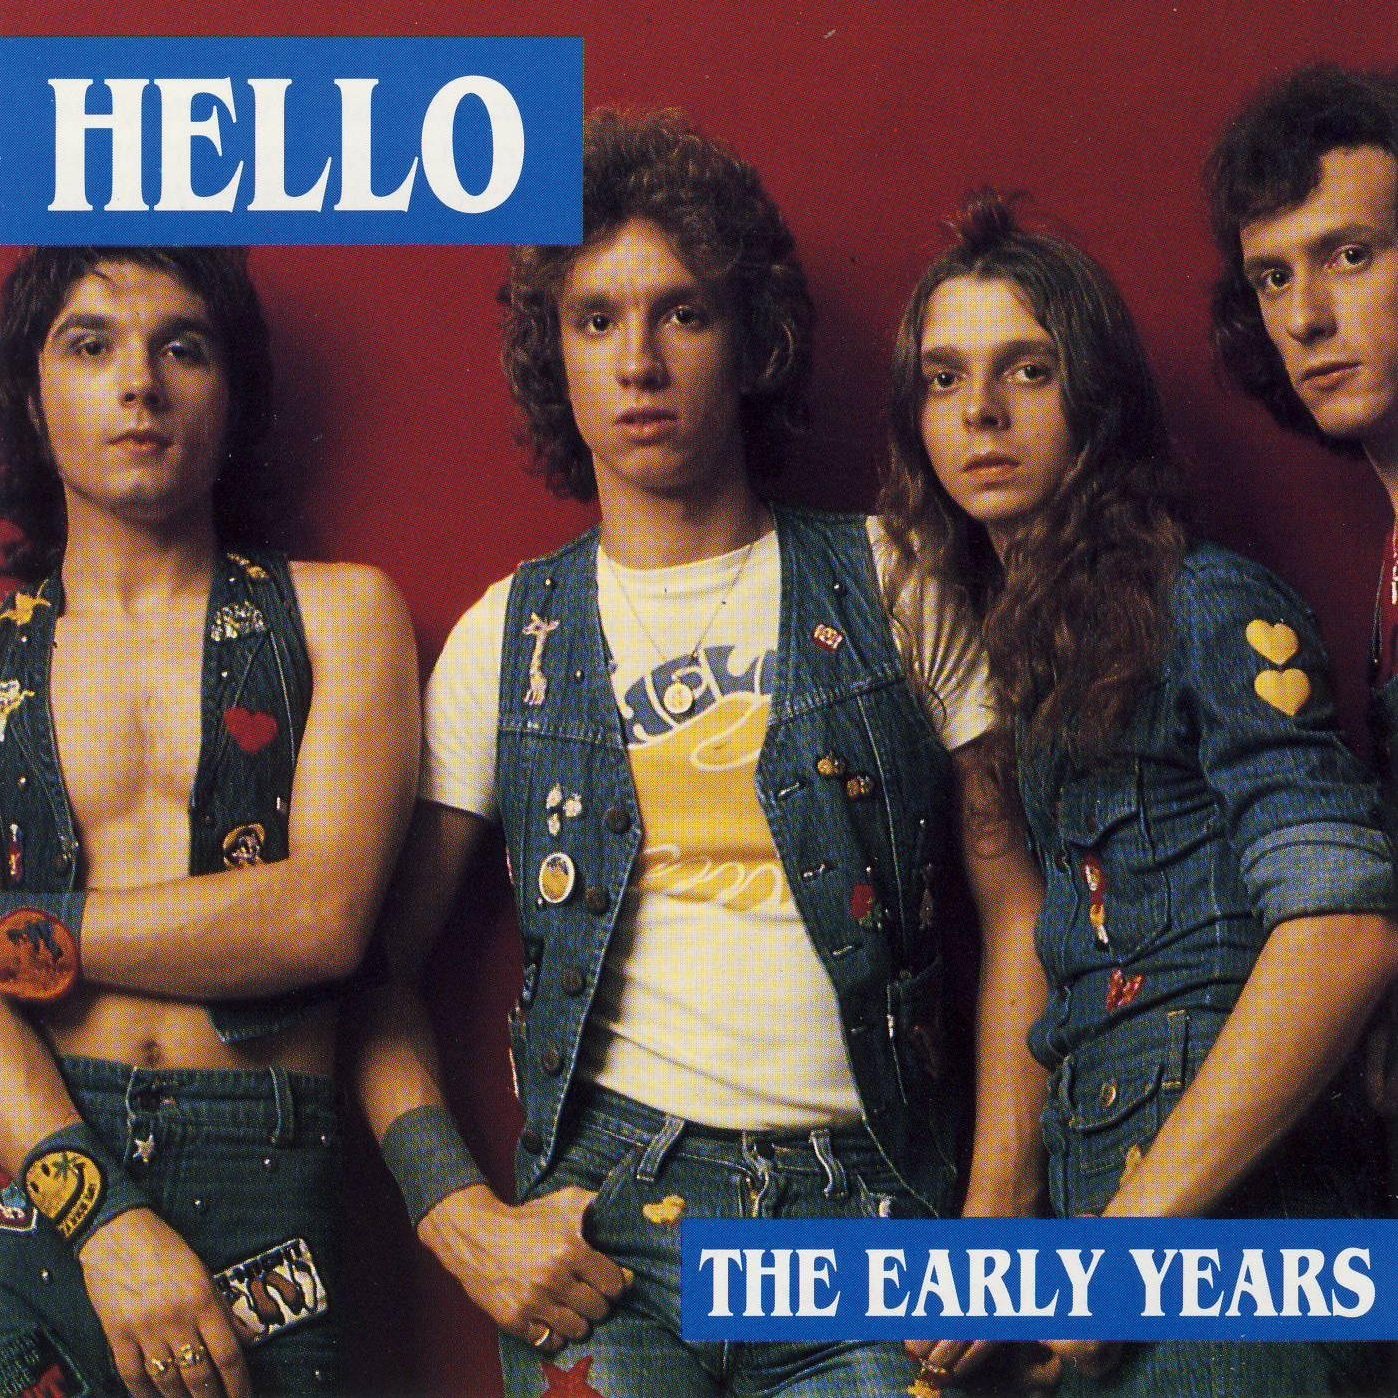 Группа привет слушать. Hello группа. Британская группа Хеллоу. Hello группа из Англии. Группа hello 1976г.